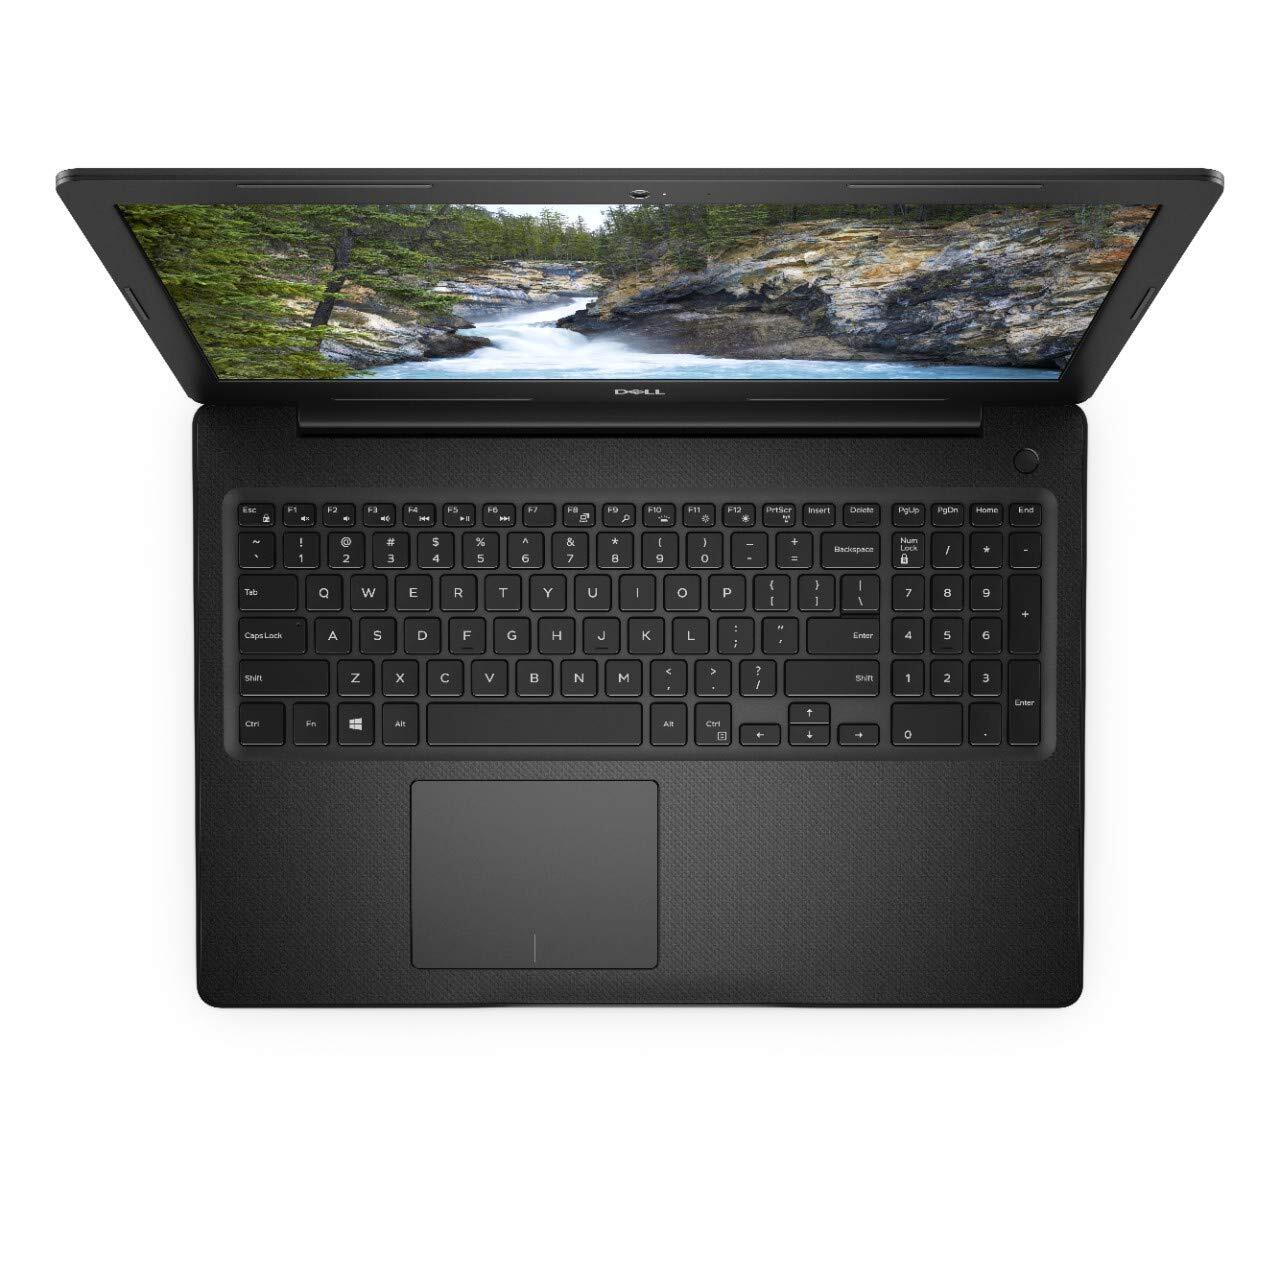 Dell Vostro 3590 15.6-inch FHD Laptop (10th Gen Core i3-10110U/4GB/1TB HDD/Windows 10 + MS Office/Intel HD Graphics), Black-M000000000521 www.mysocially.com